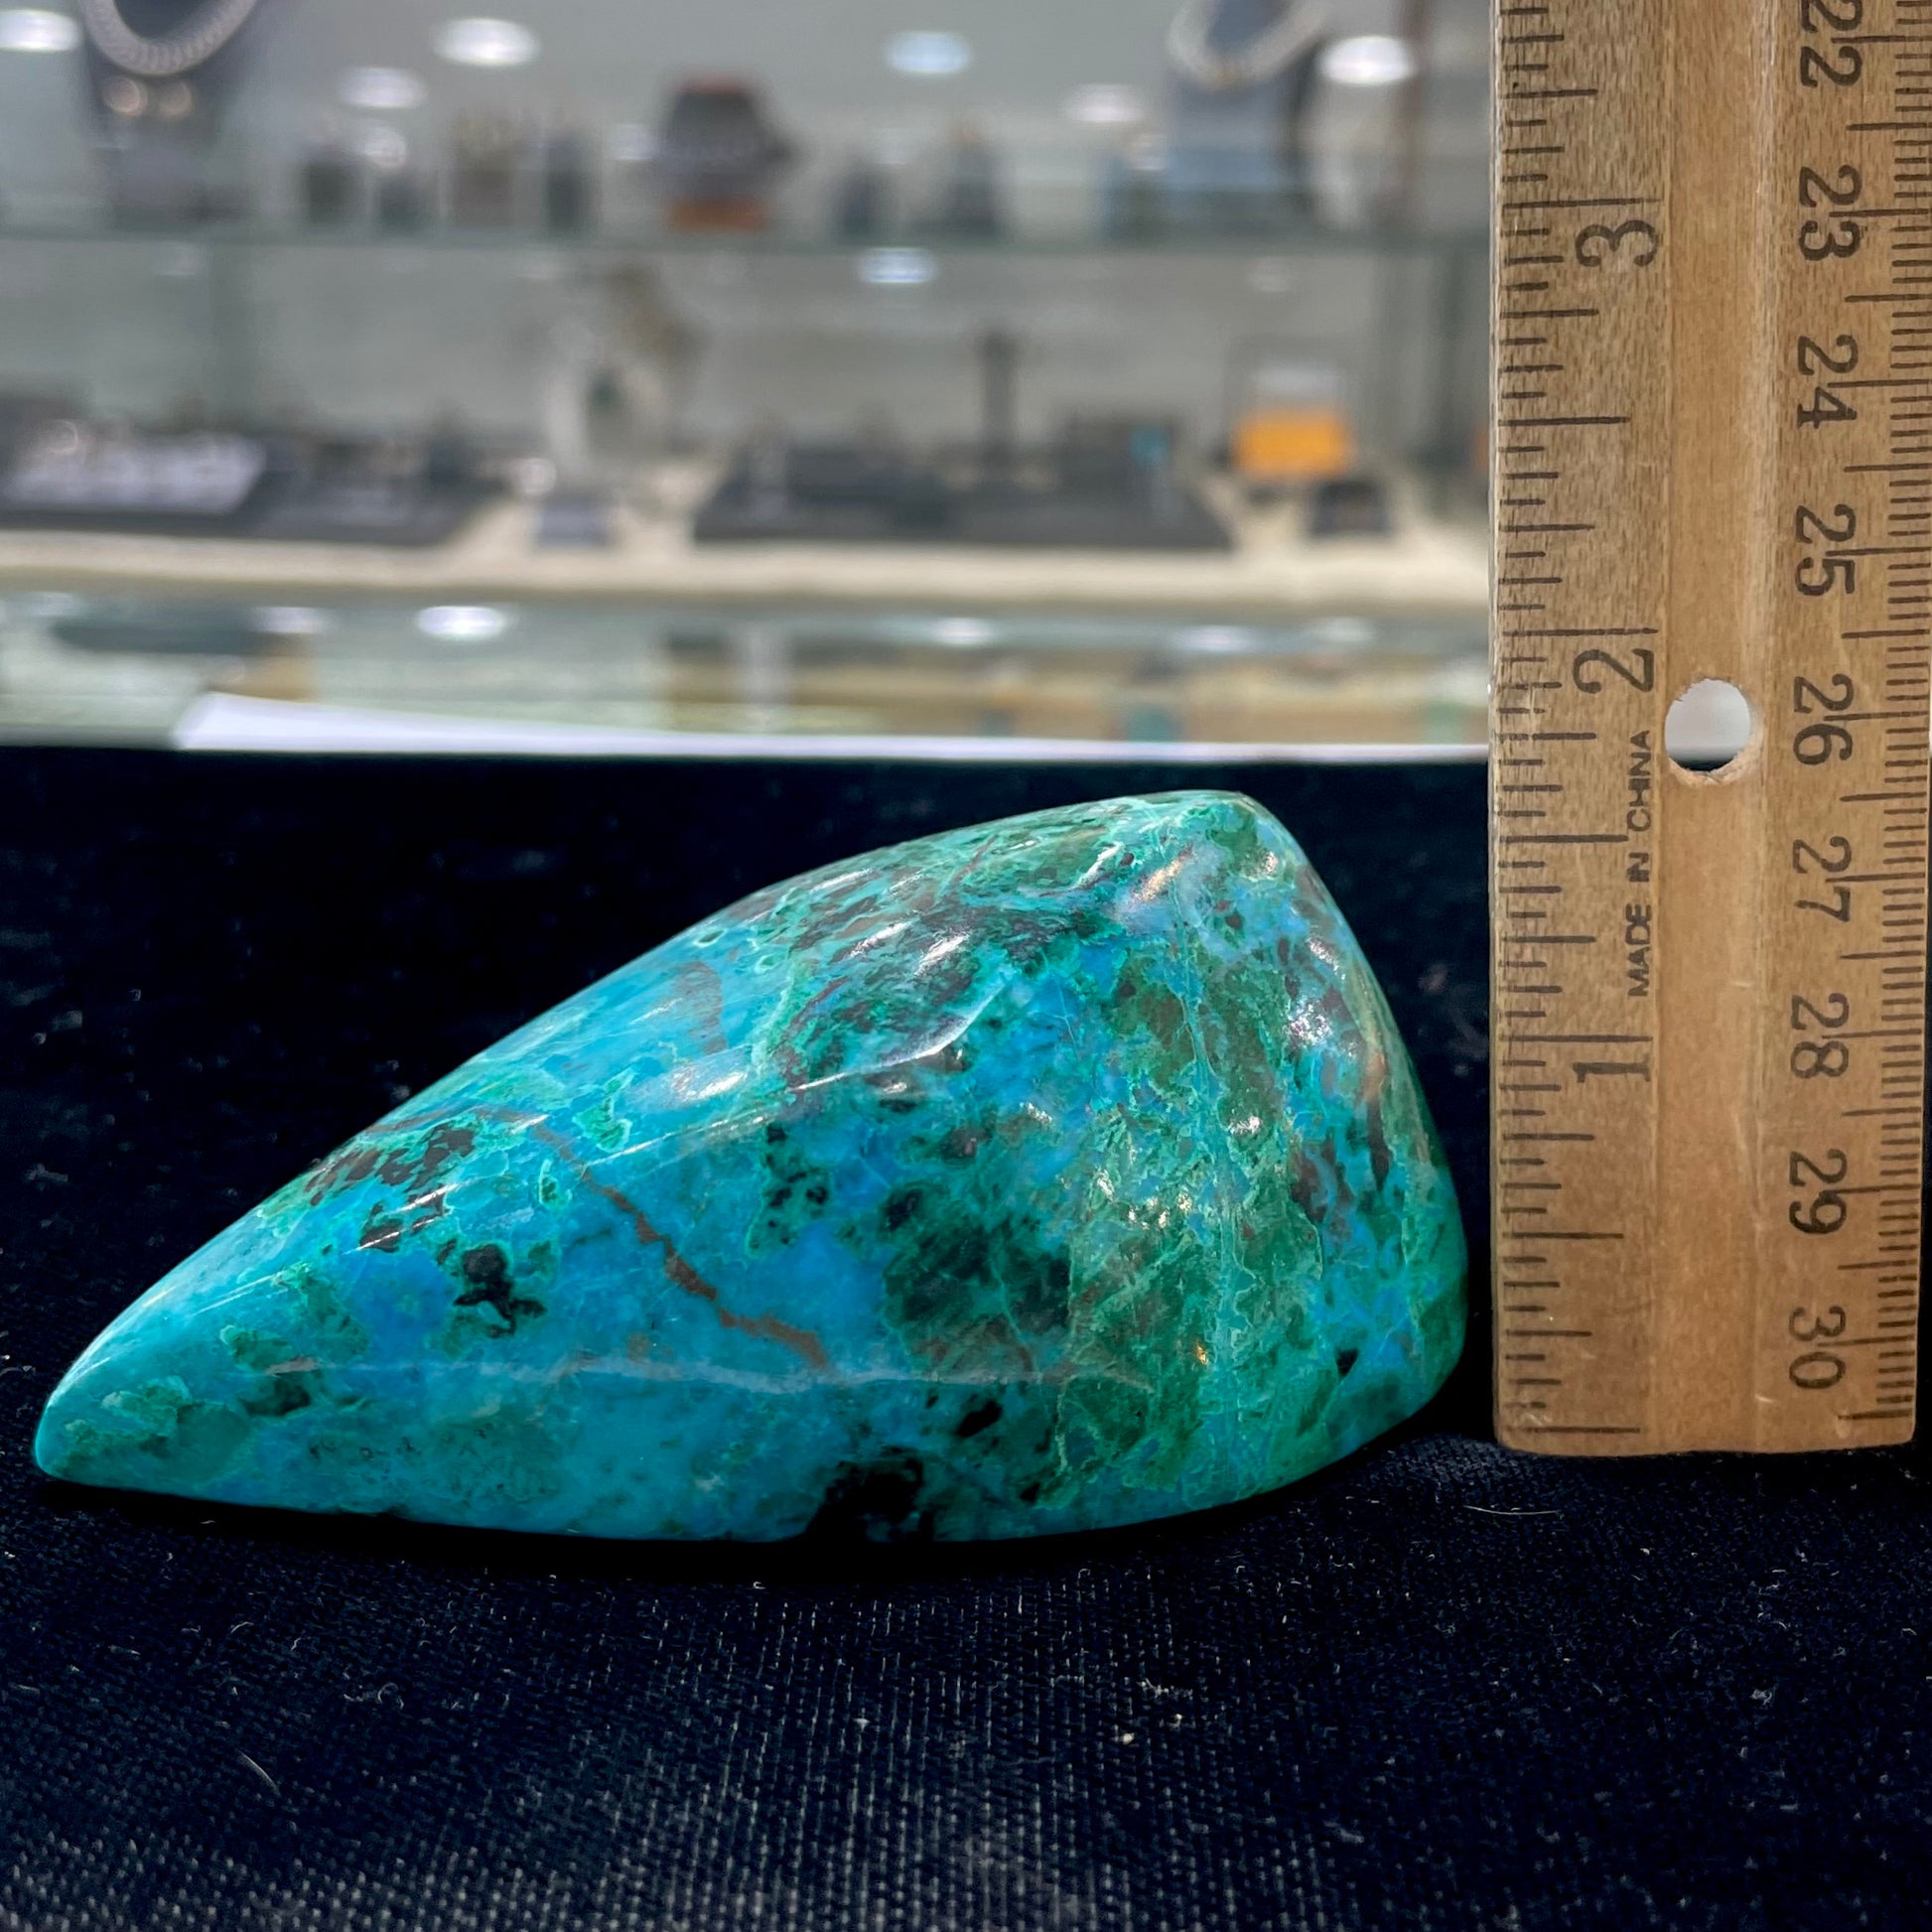 A polished Eilat Stone specimen from King Solomon's Mine, Israel.